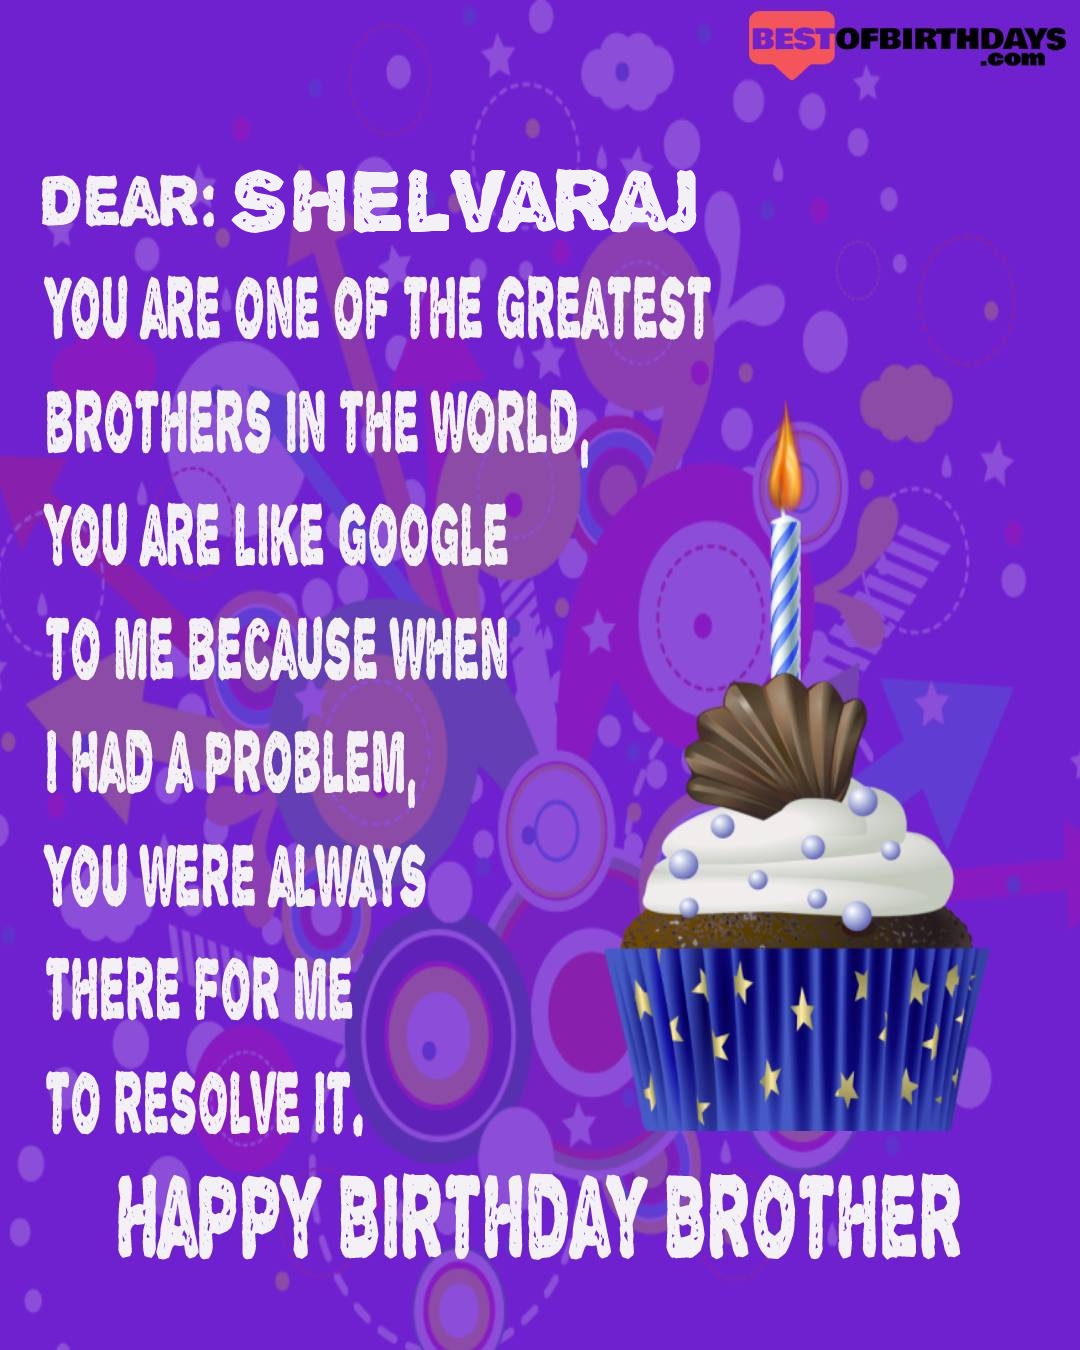 Happy birthday shelvaraj bhai brother bro